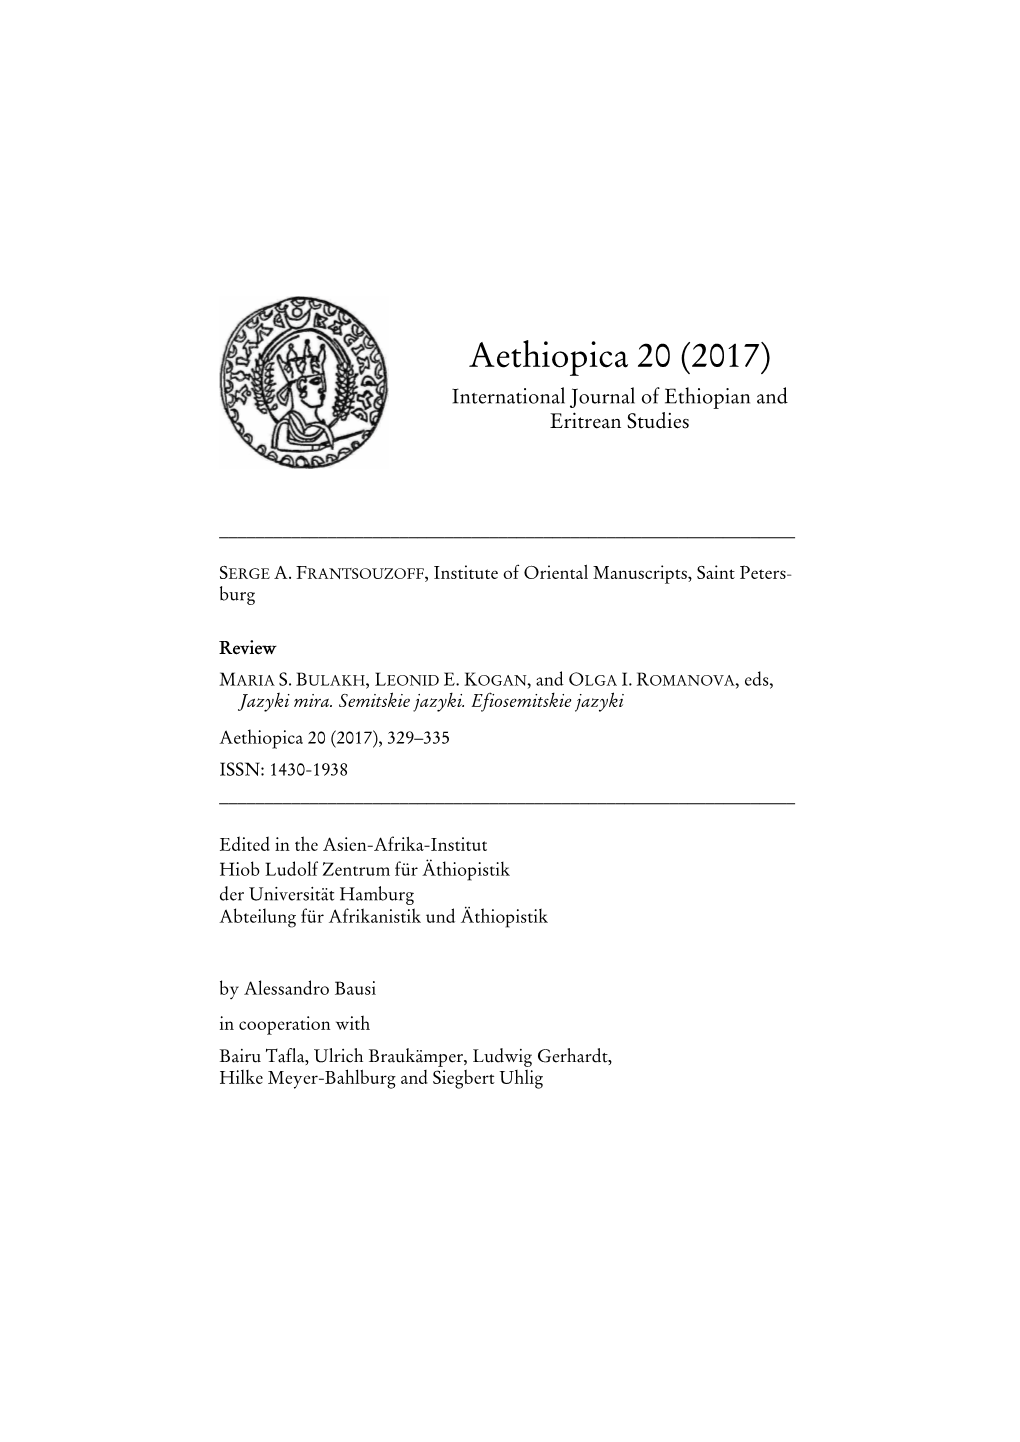 Aethiopica 20 (2017) International Journal of Ethiopian and Eritrean Studies